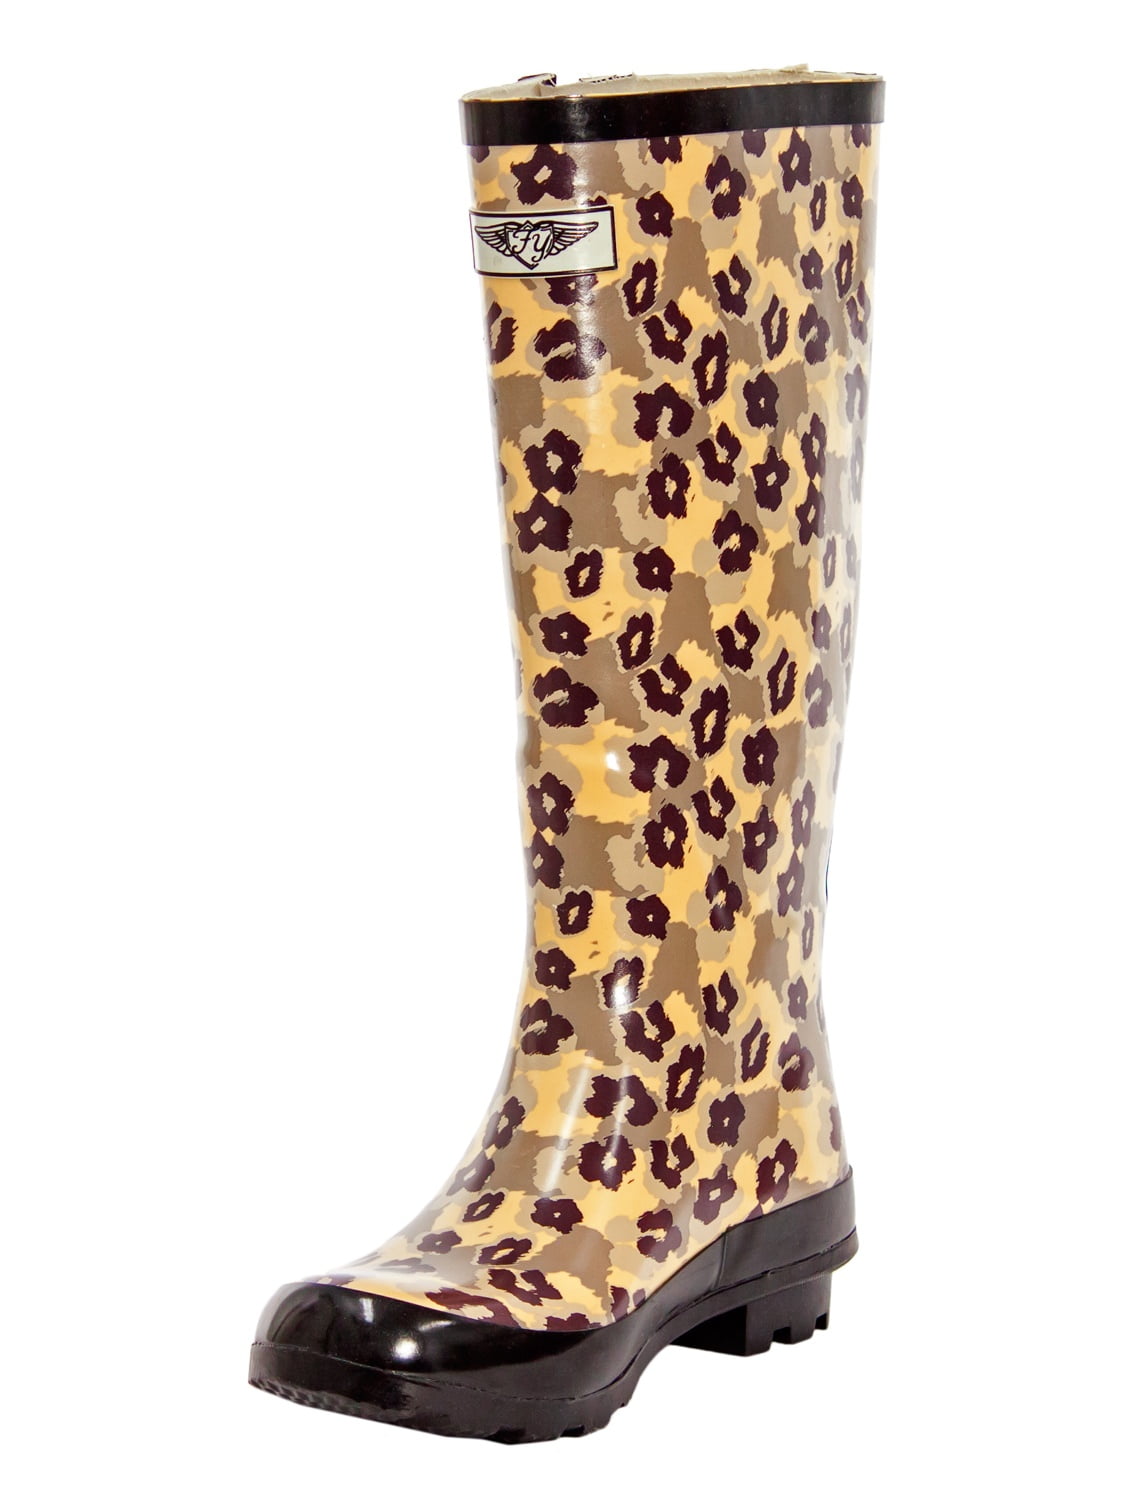 Women Rubber Rain Boots with Cotton Lining, Animal Camo - Walmart.com